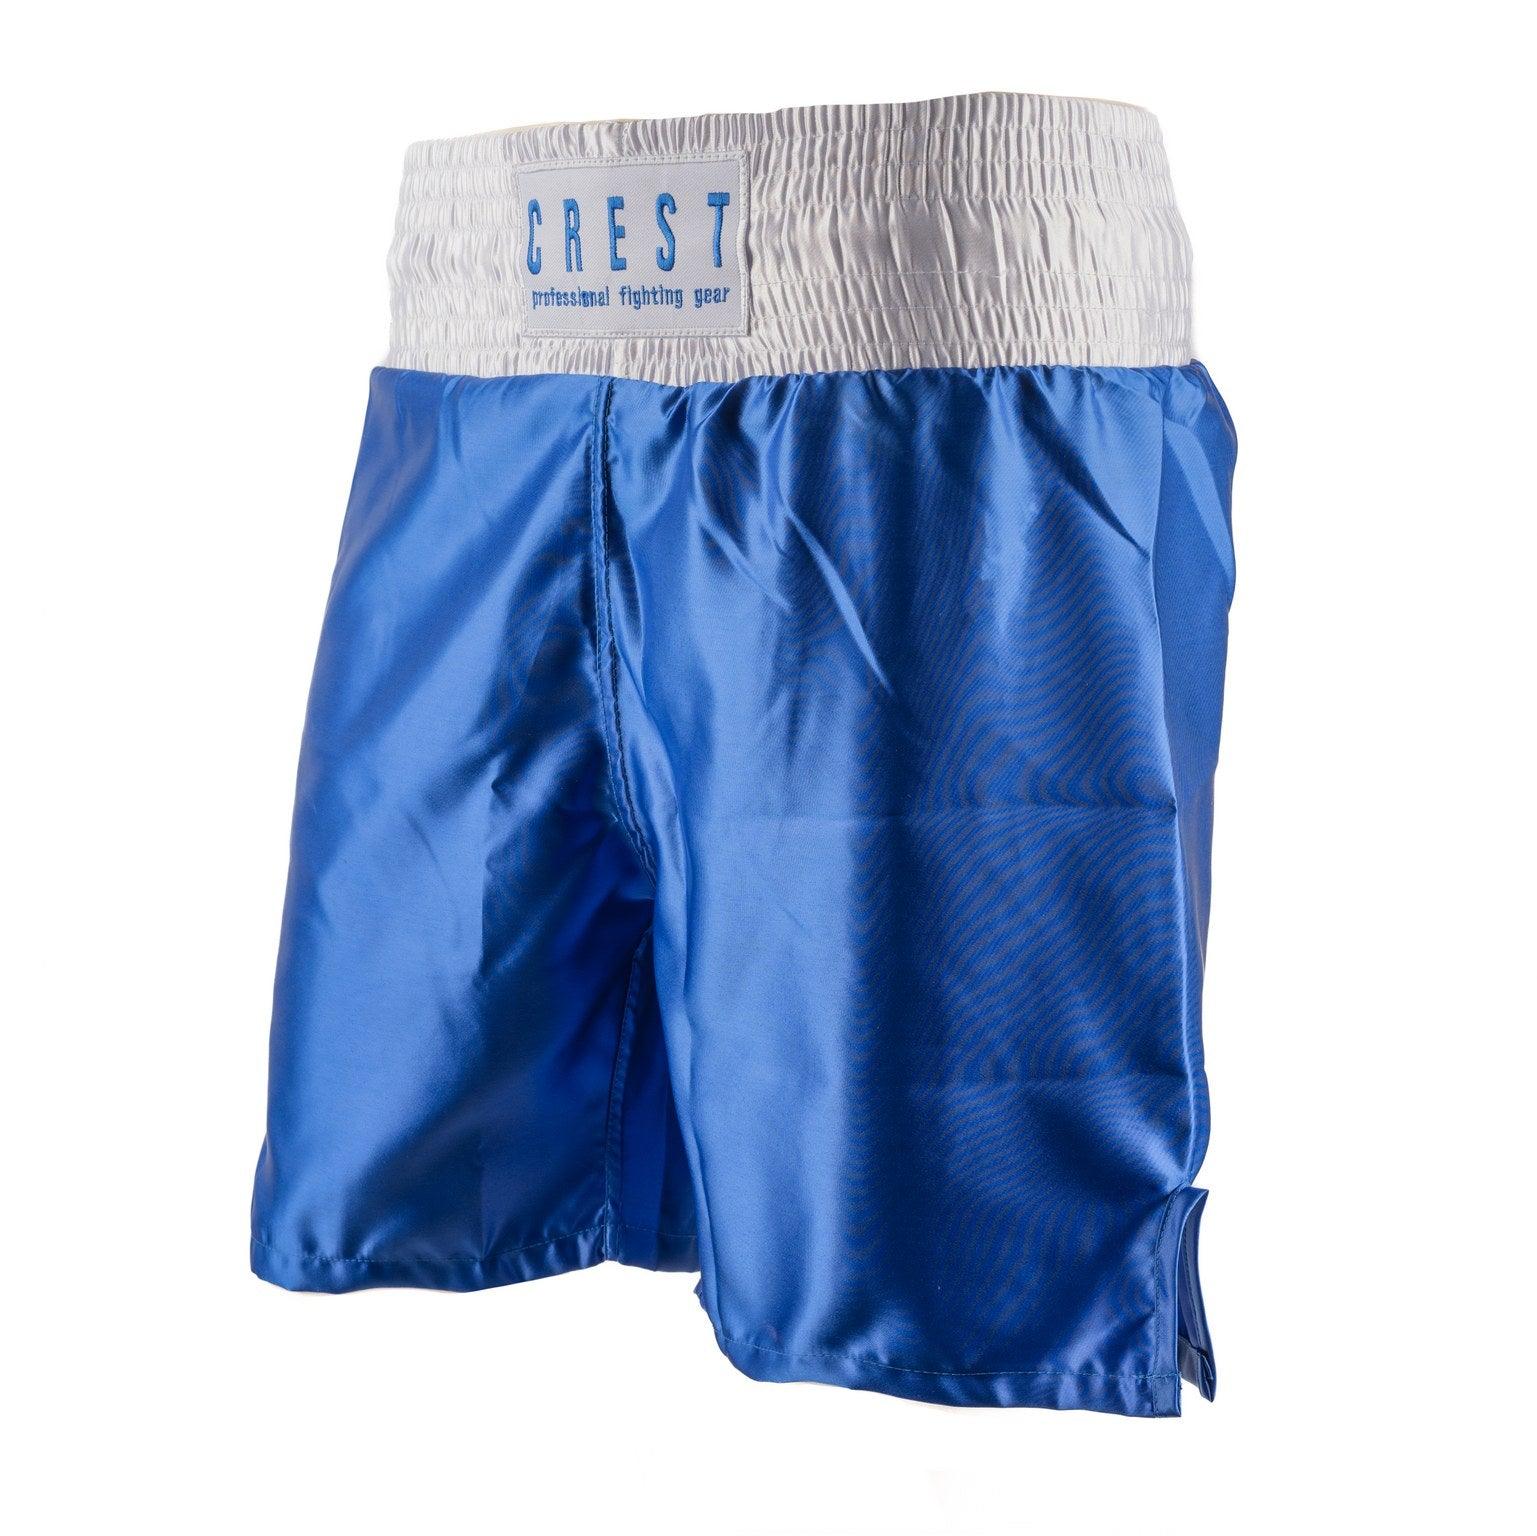 Boxing shorts "C R E S T" - Crest - PFG